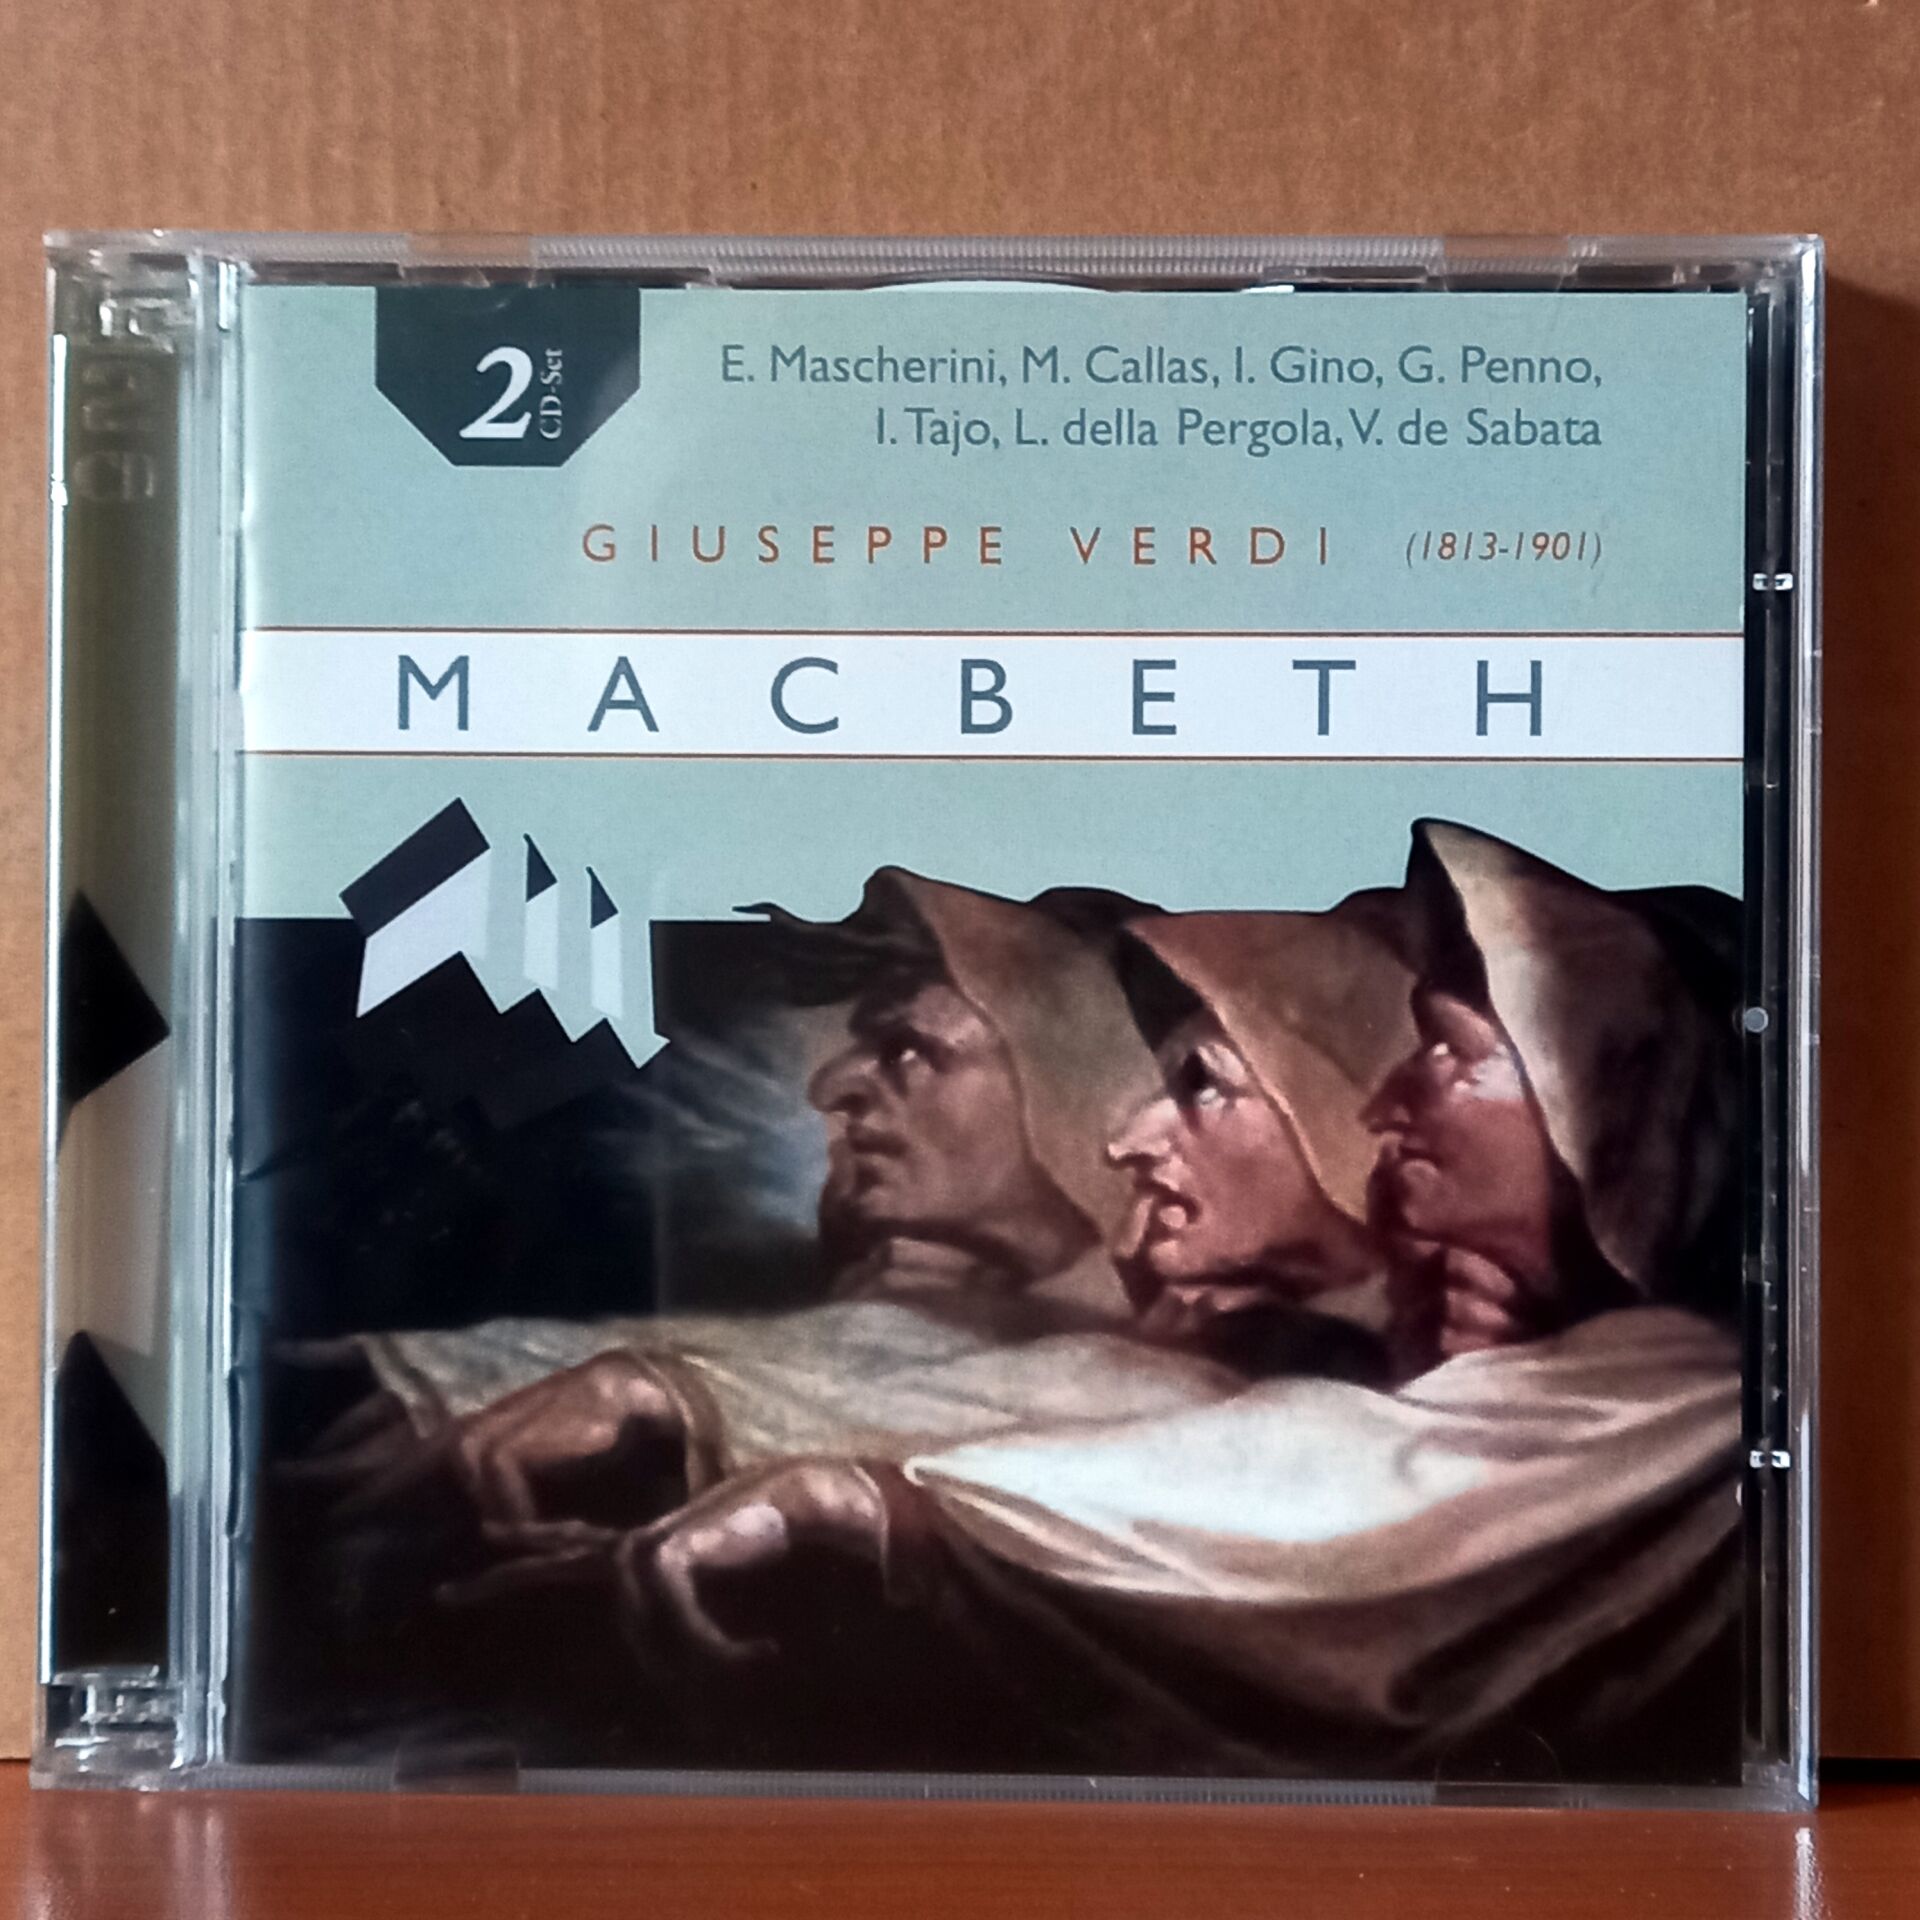 GIUSEPPE VERDI: MACBETH / E. MASCHERINI, M. CALLAS, G. PENNO, I. TAJO, L. DELLA PERGOLA, V. DE SABATA (2004) - 2CD 2.EL